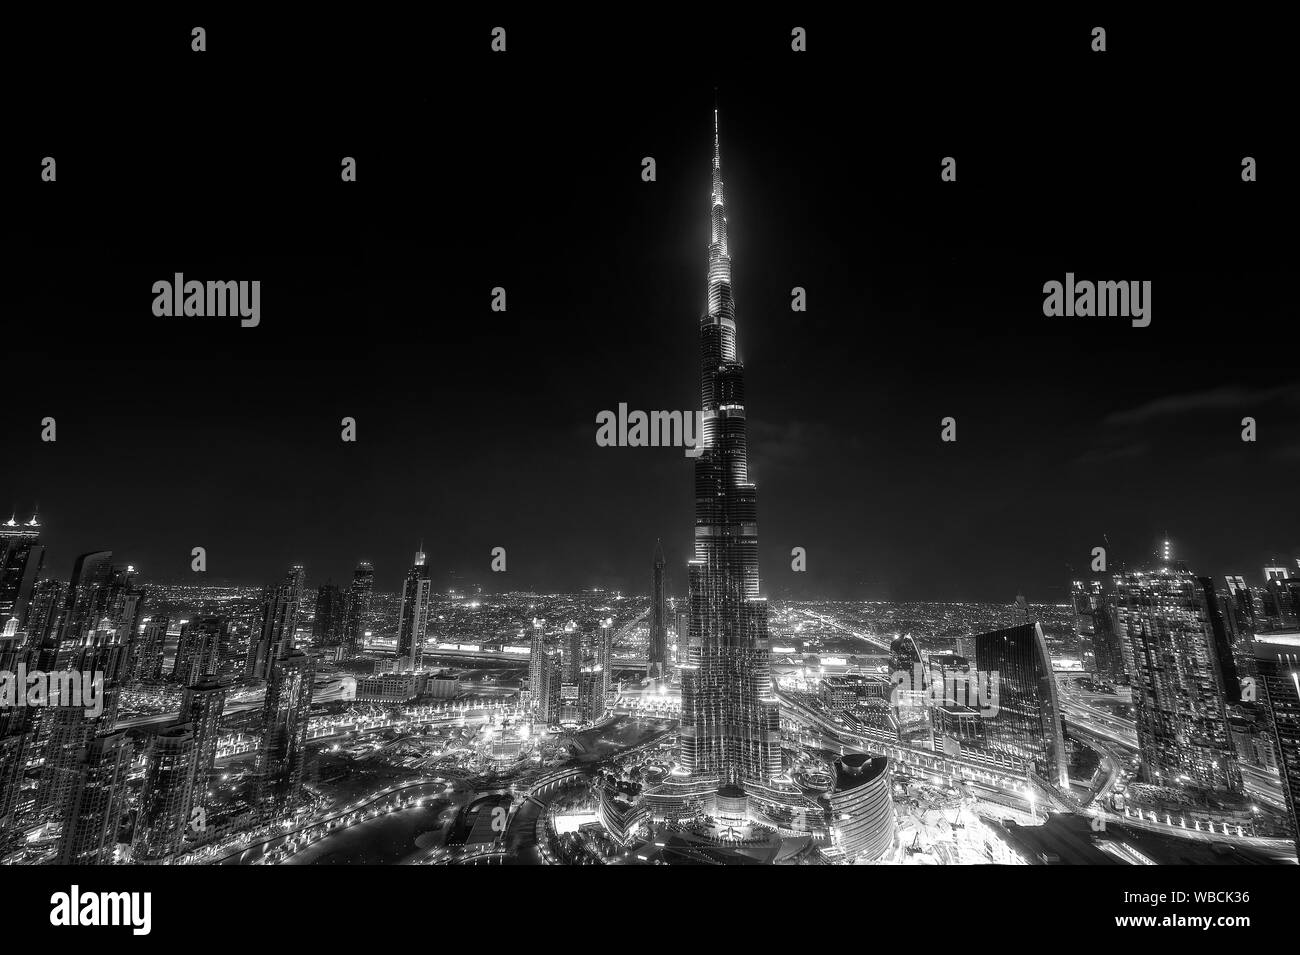 Burj Khalifa at night on the city of Dubai skyline in black and white Stock Photo